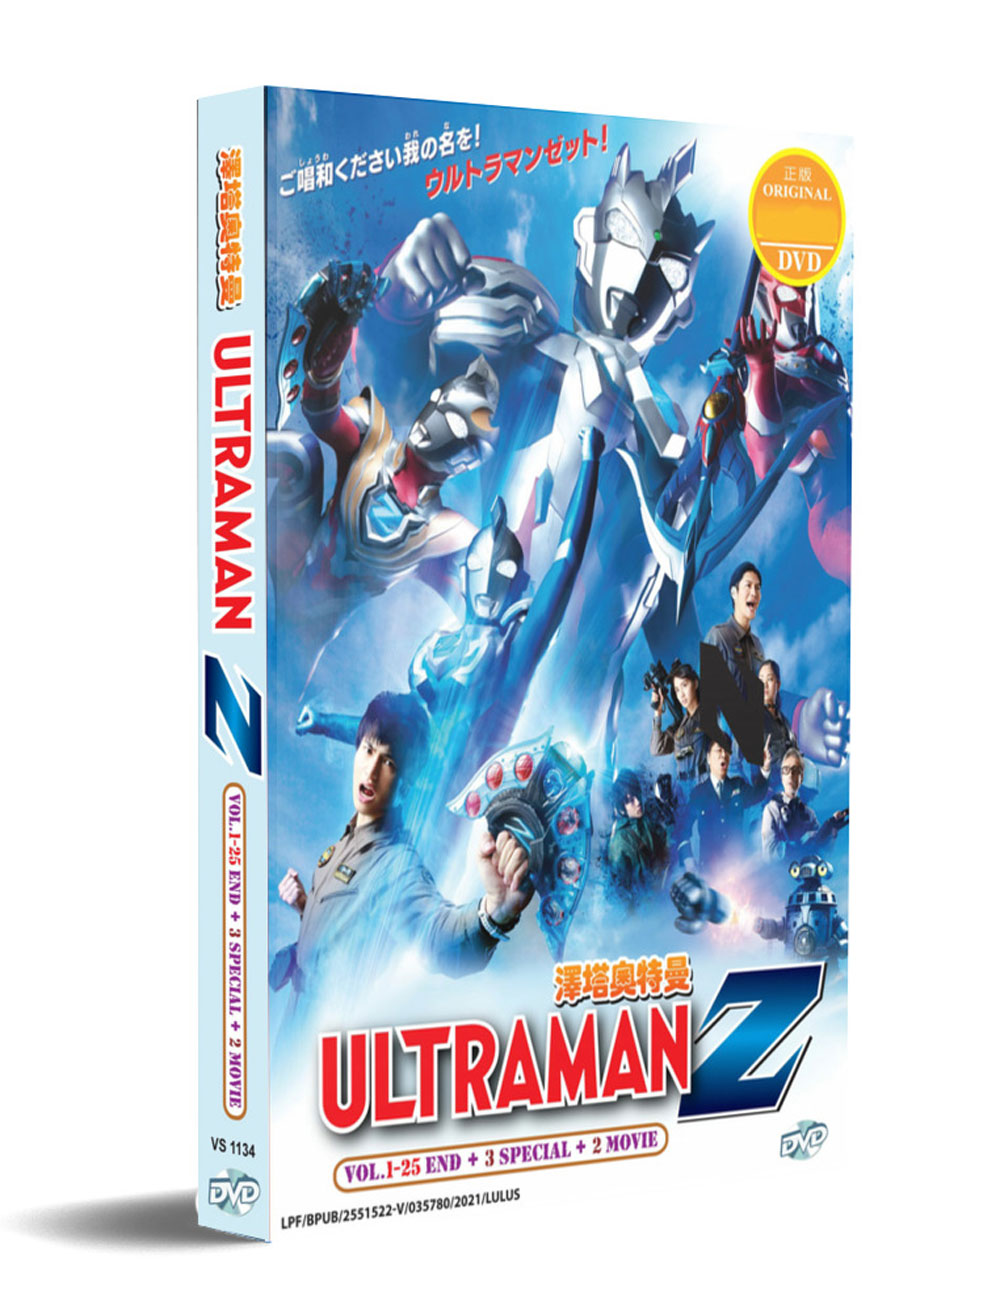 Ultraman Z +3 Special +2 Movie (DVD) (2020) アニメ